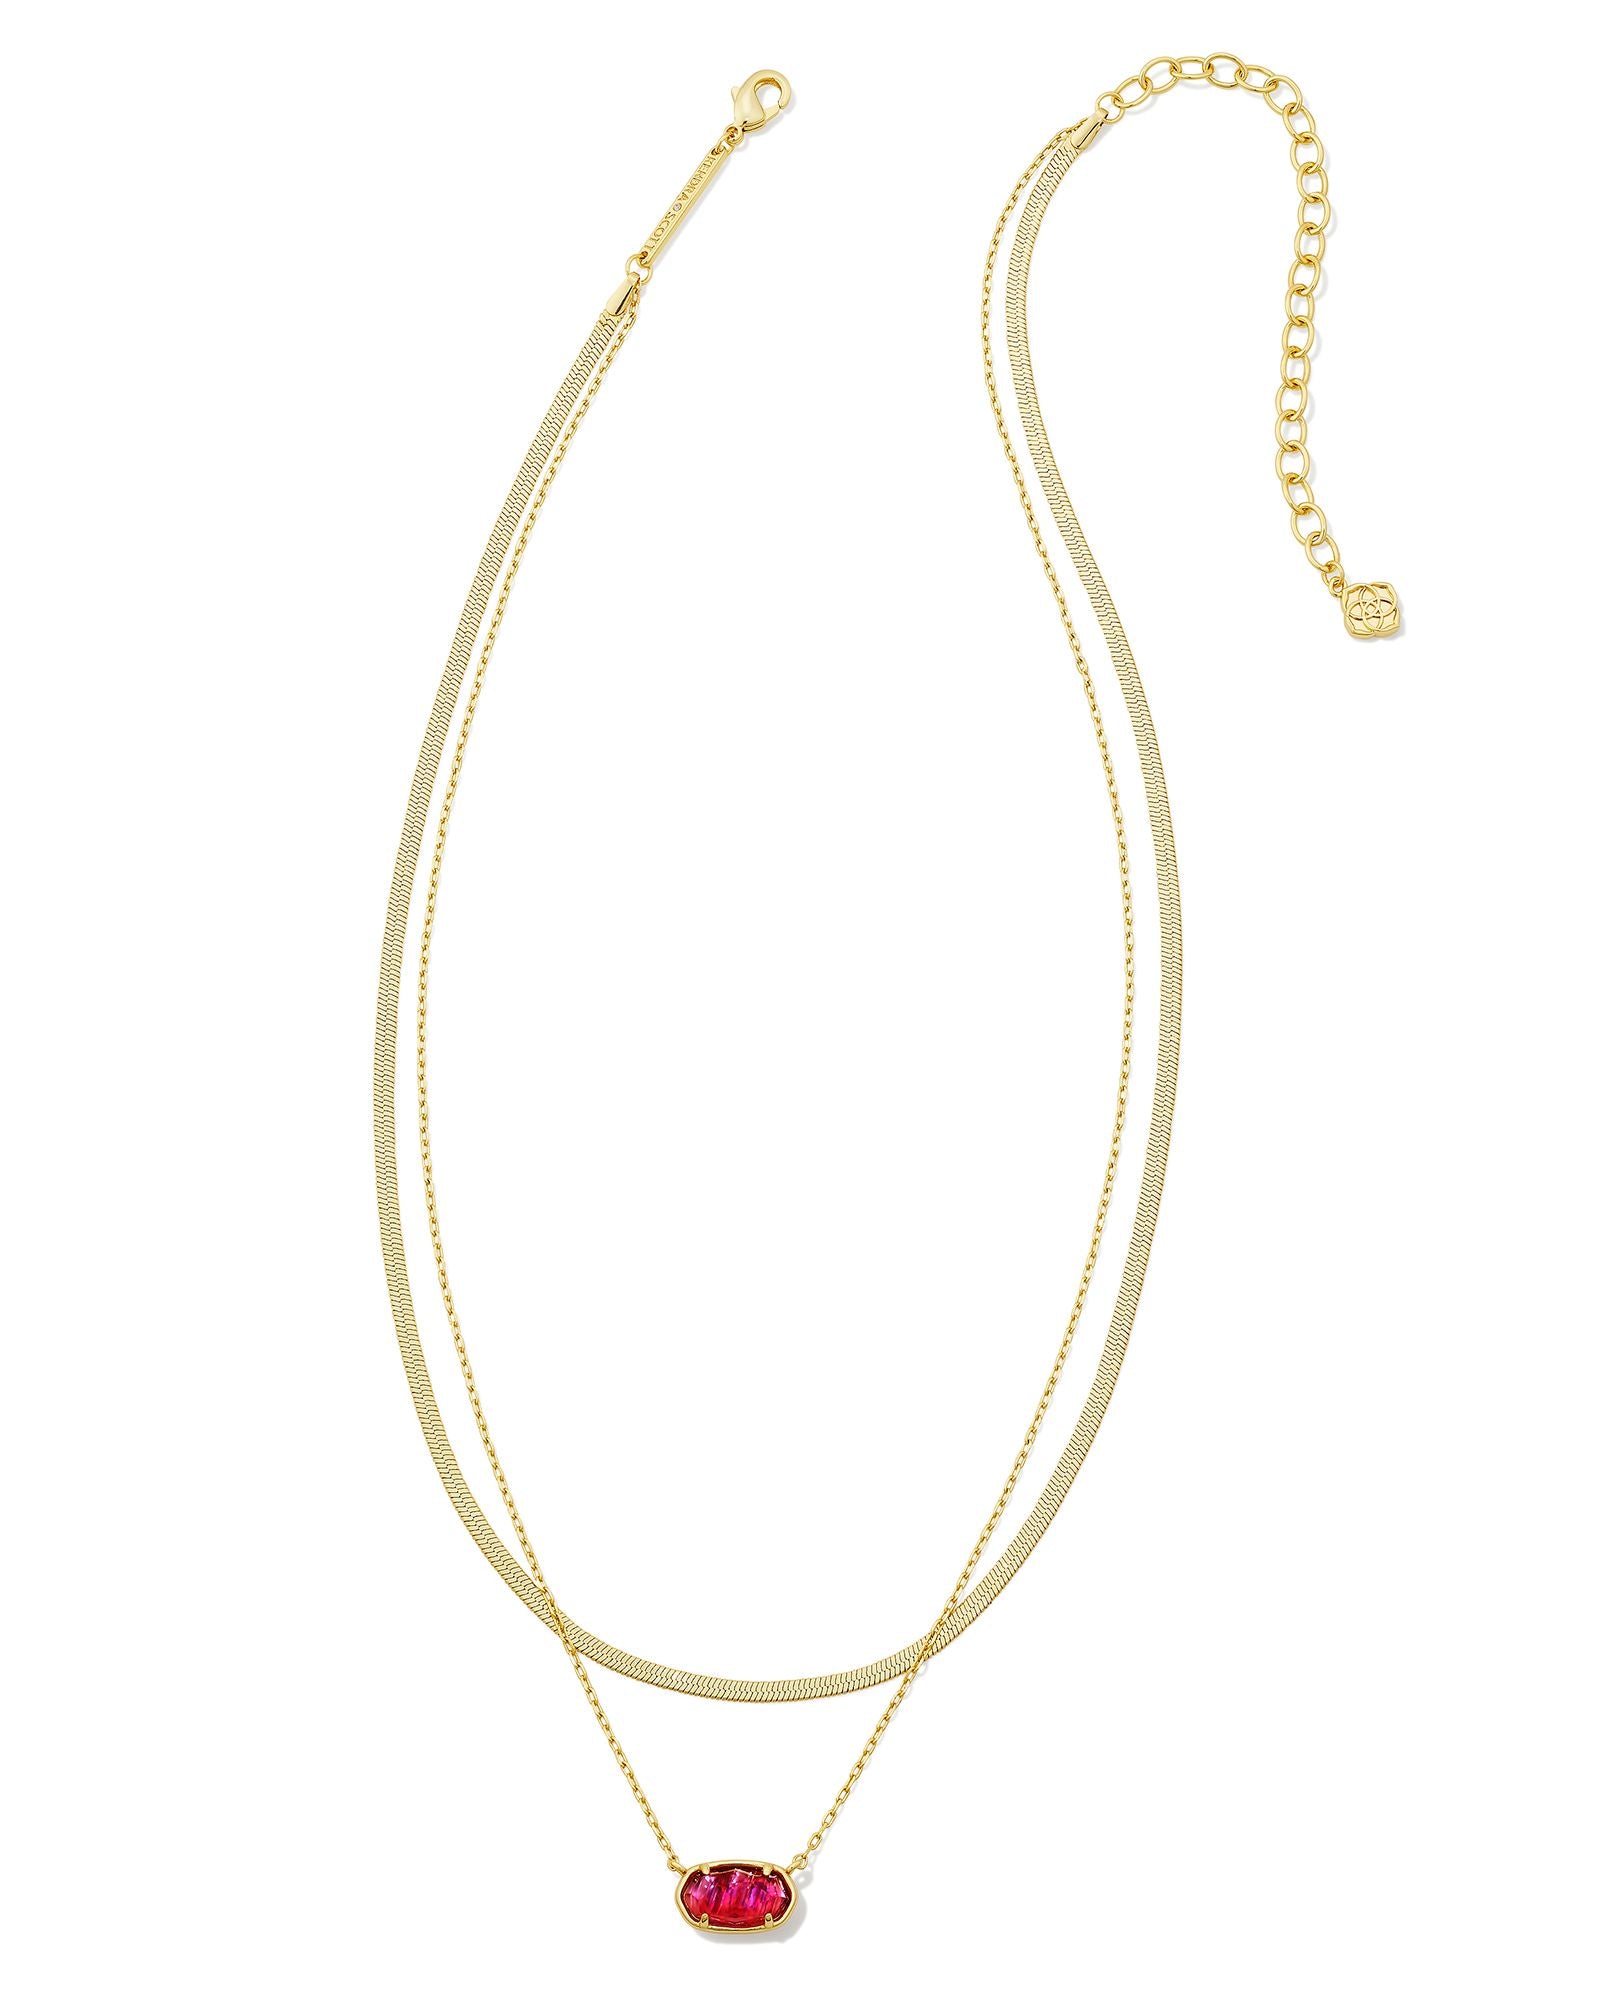 Kendra Scott Grayson Herringbone Multi Strand Necklace in Light Burgundy Illusion and Gold